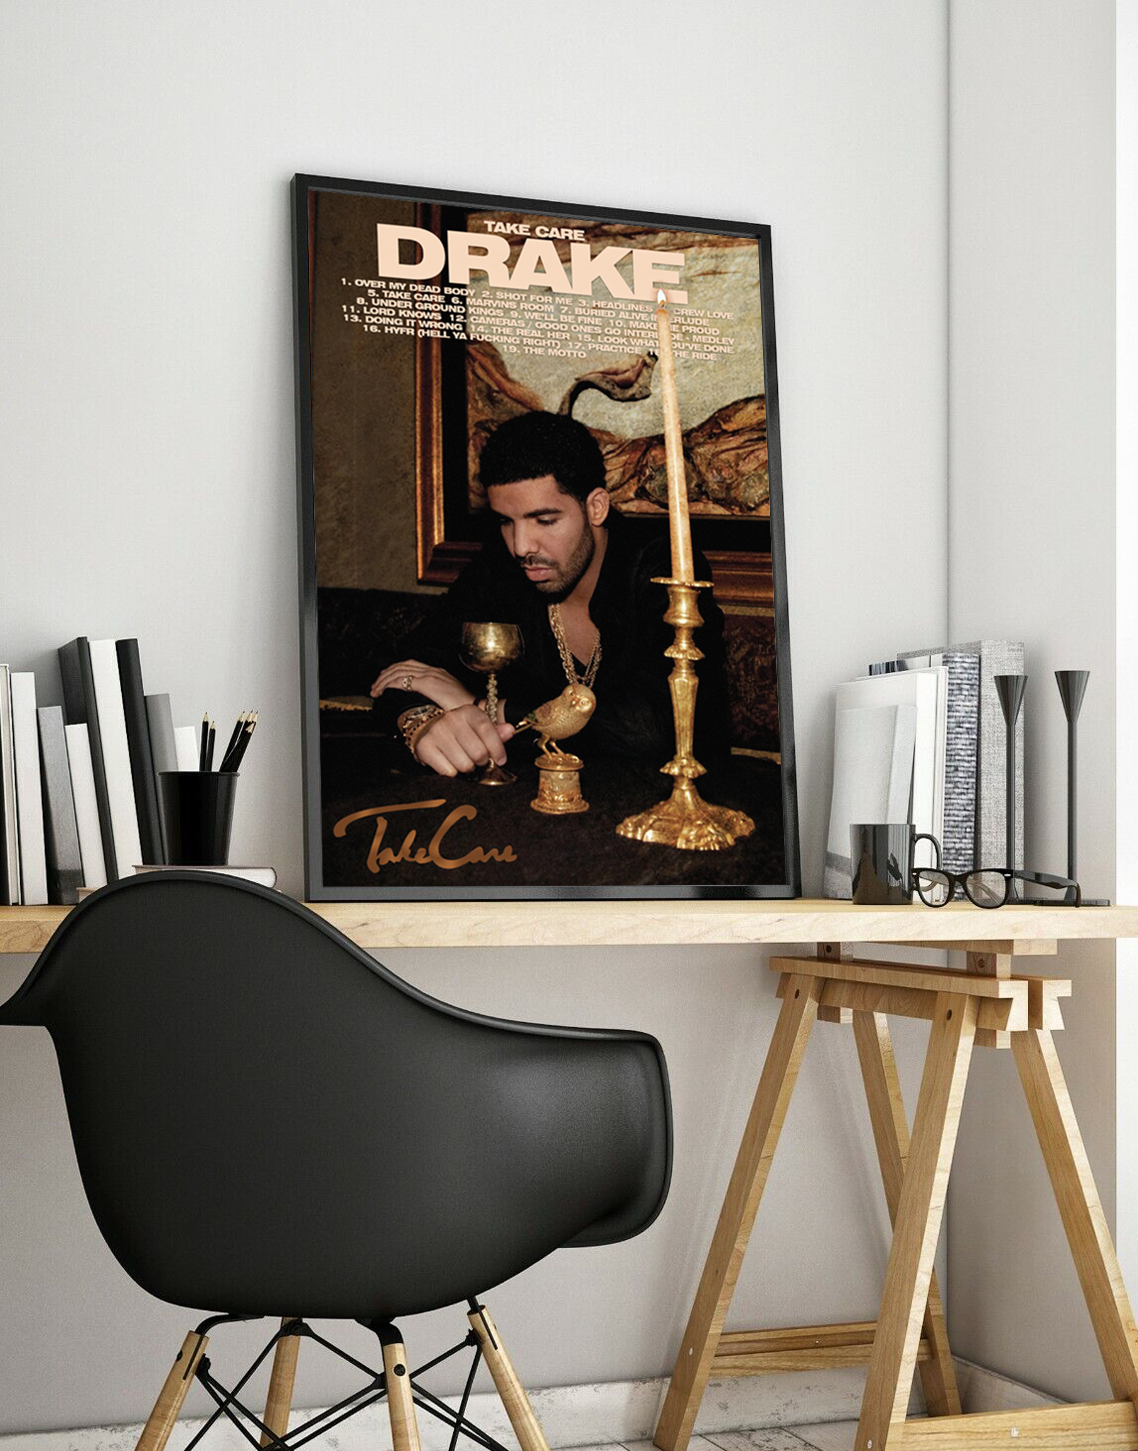 Drake ‘Take Care’ Premium Album Music Poster | Cover Artwork and Tracklist